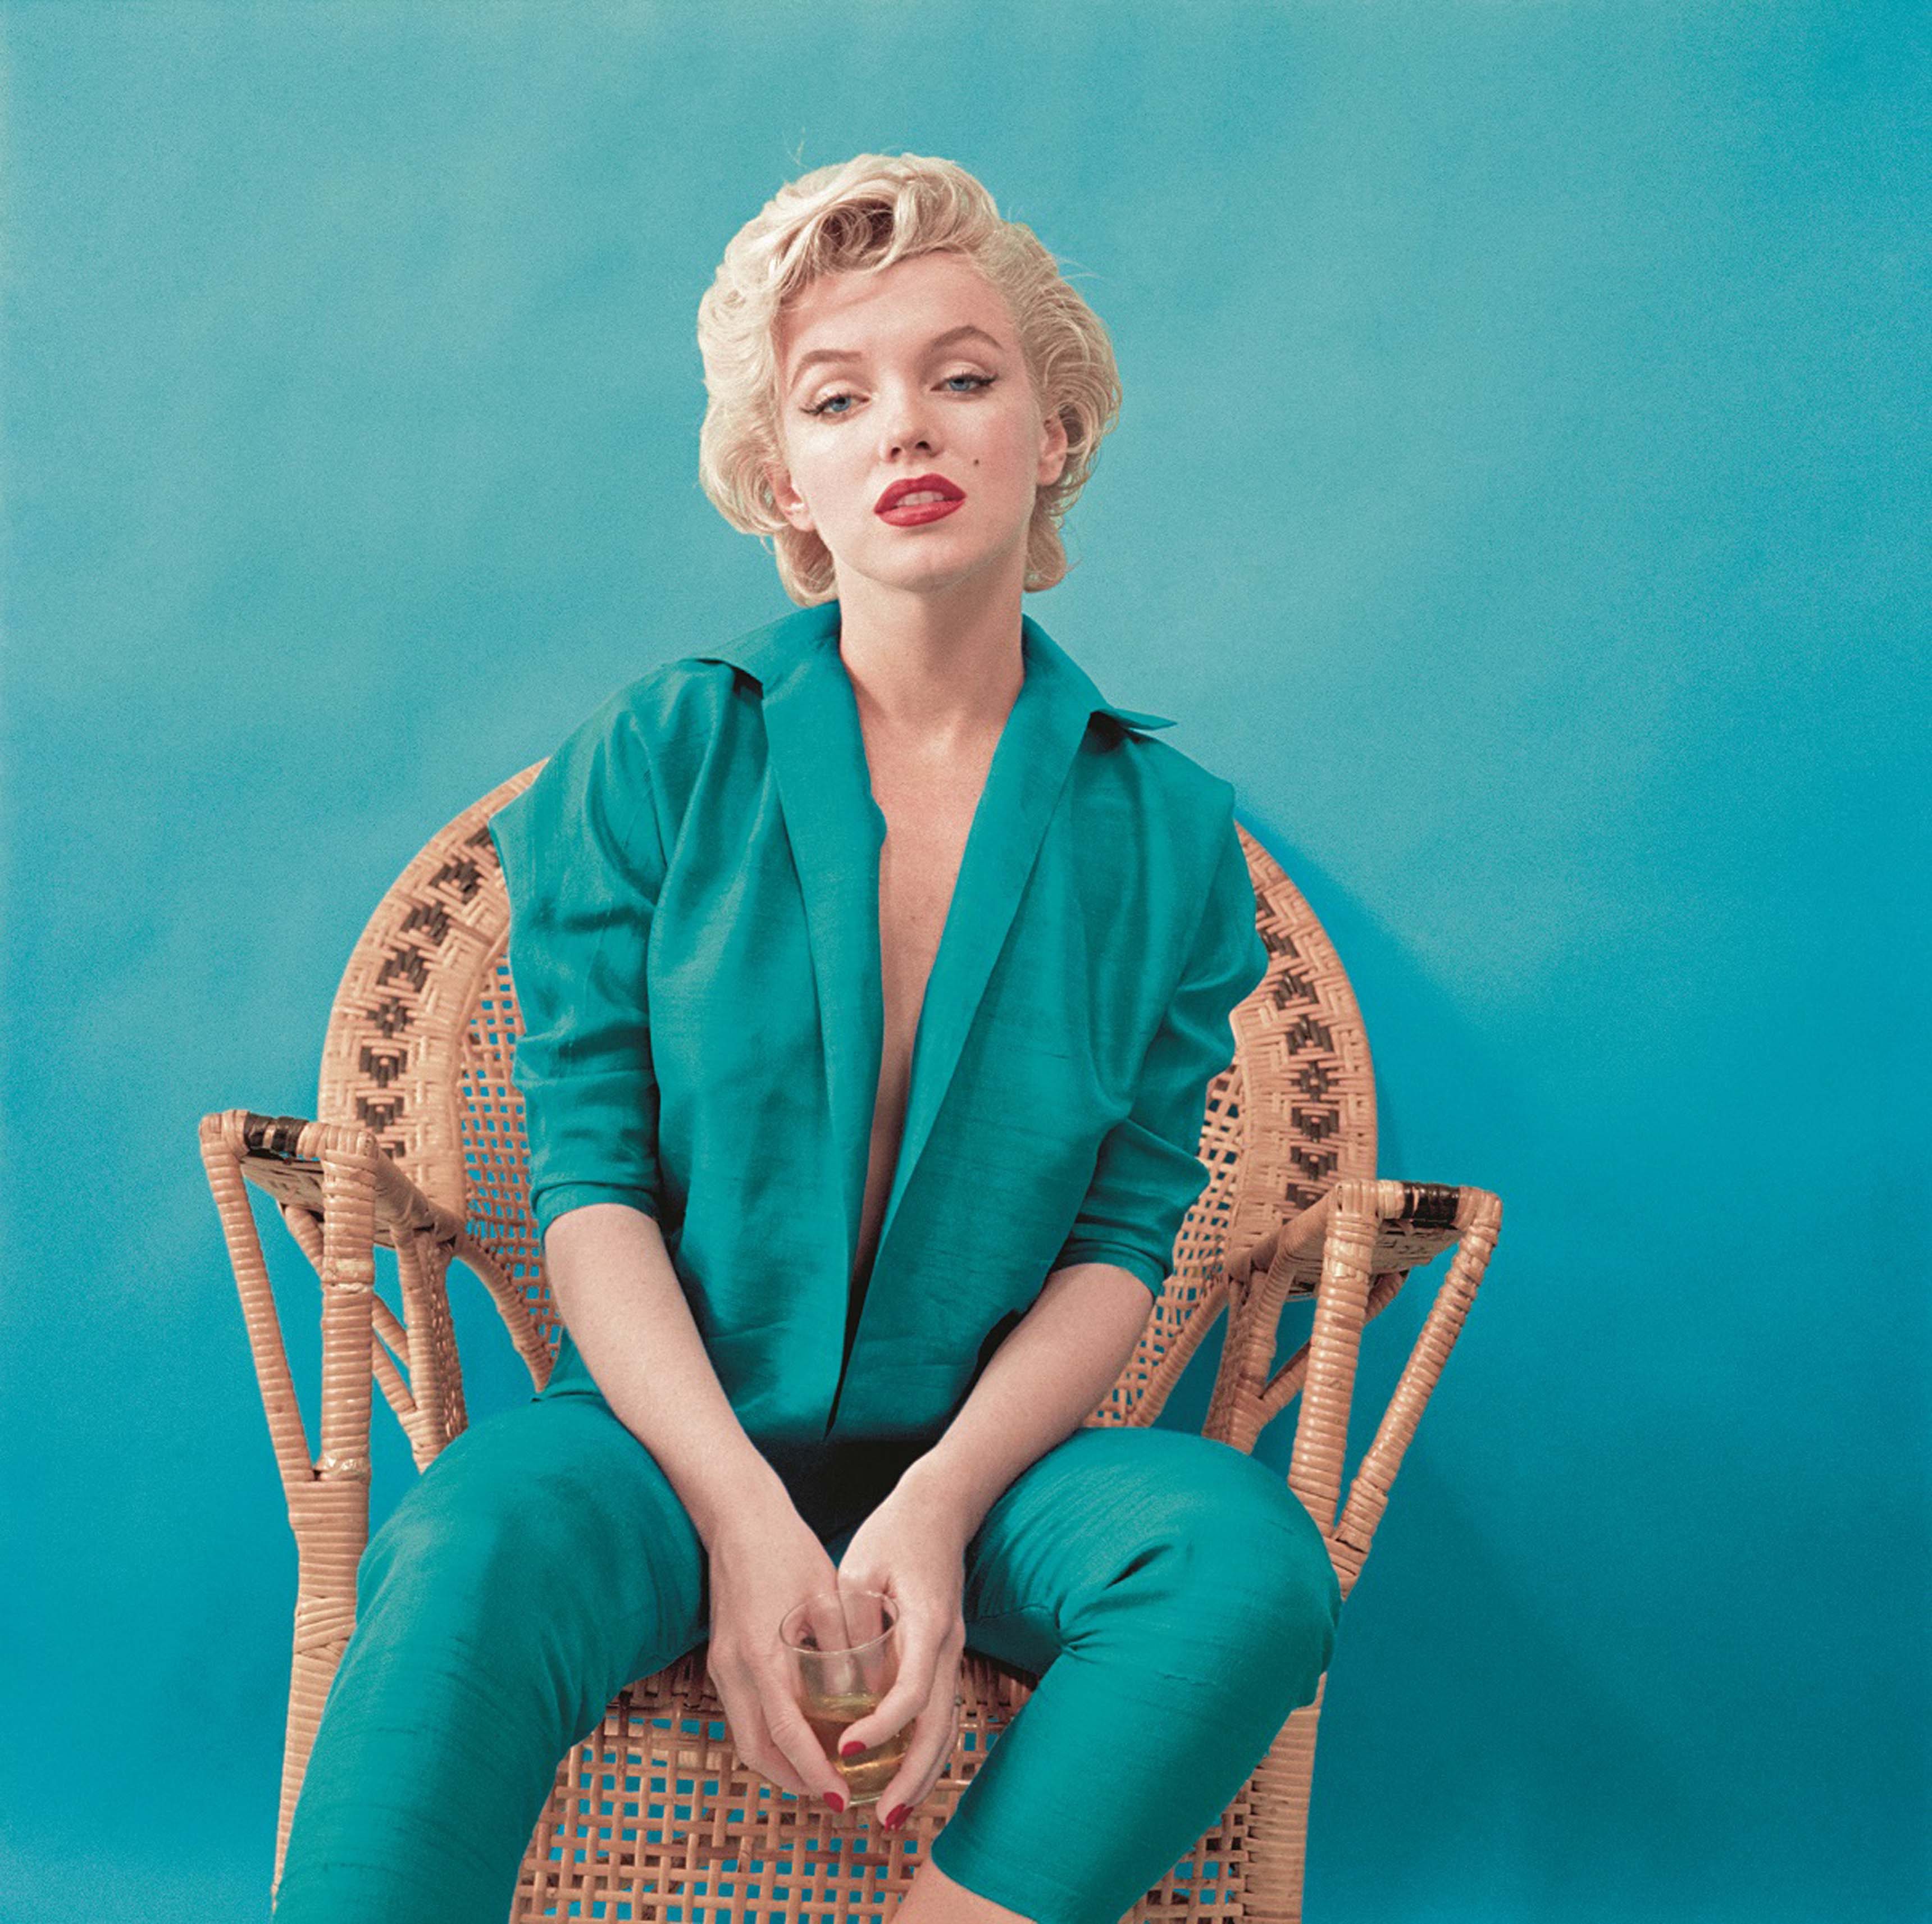 Les dernières images secrètes de Marilyn Monroe. Photographed by Milton H. Greene - The Essential Marilyn Monroe, published by ACC Editions ©2017 Joshua